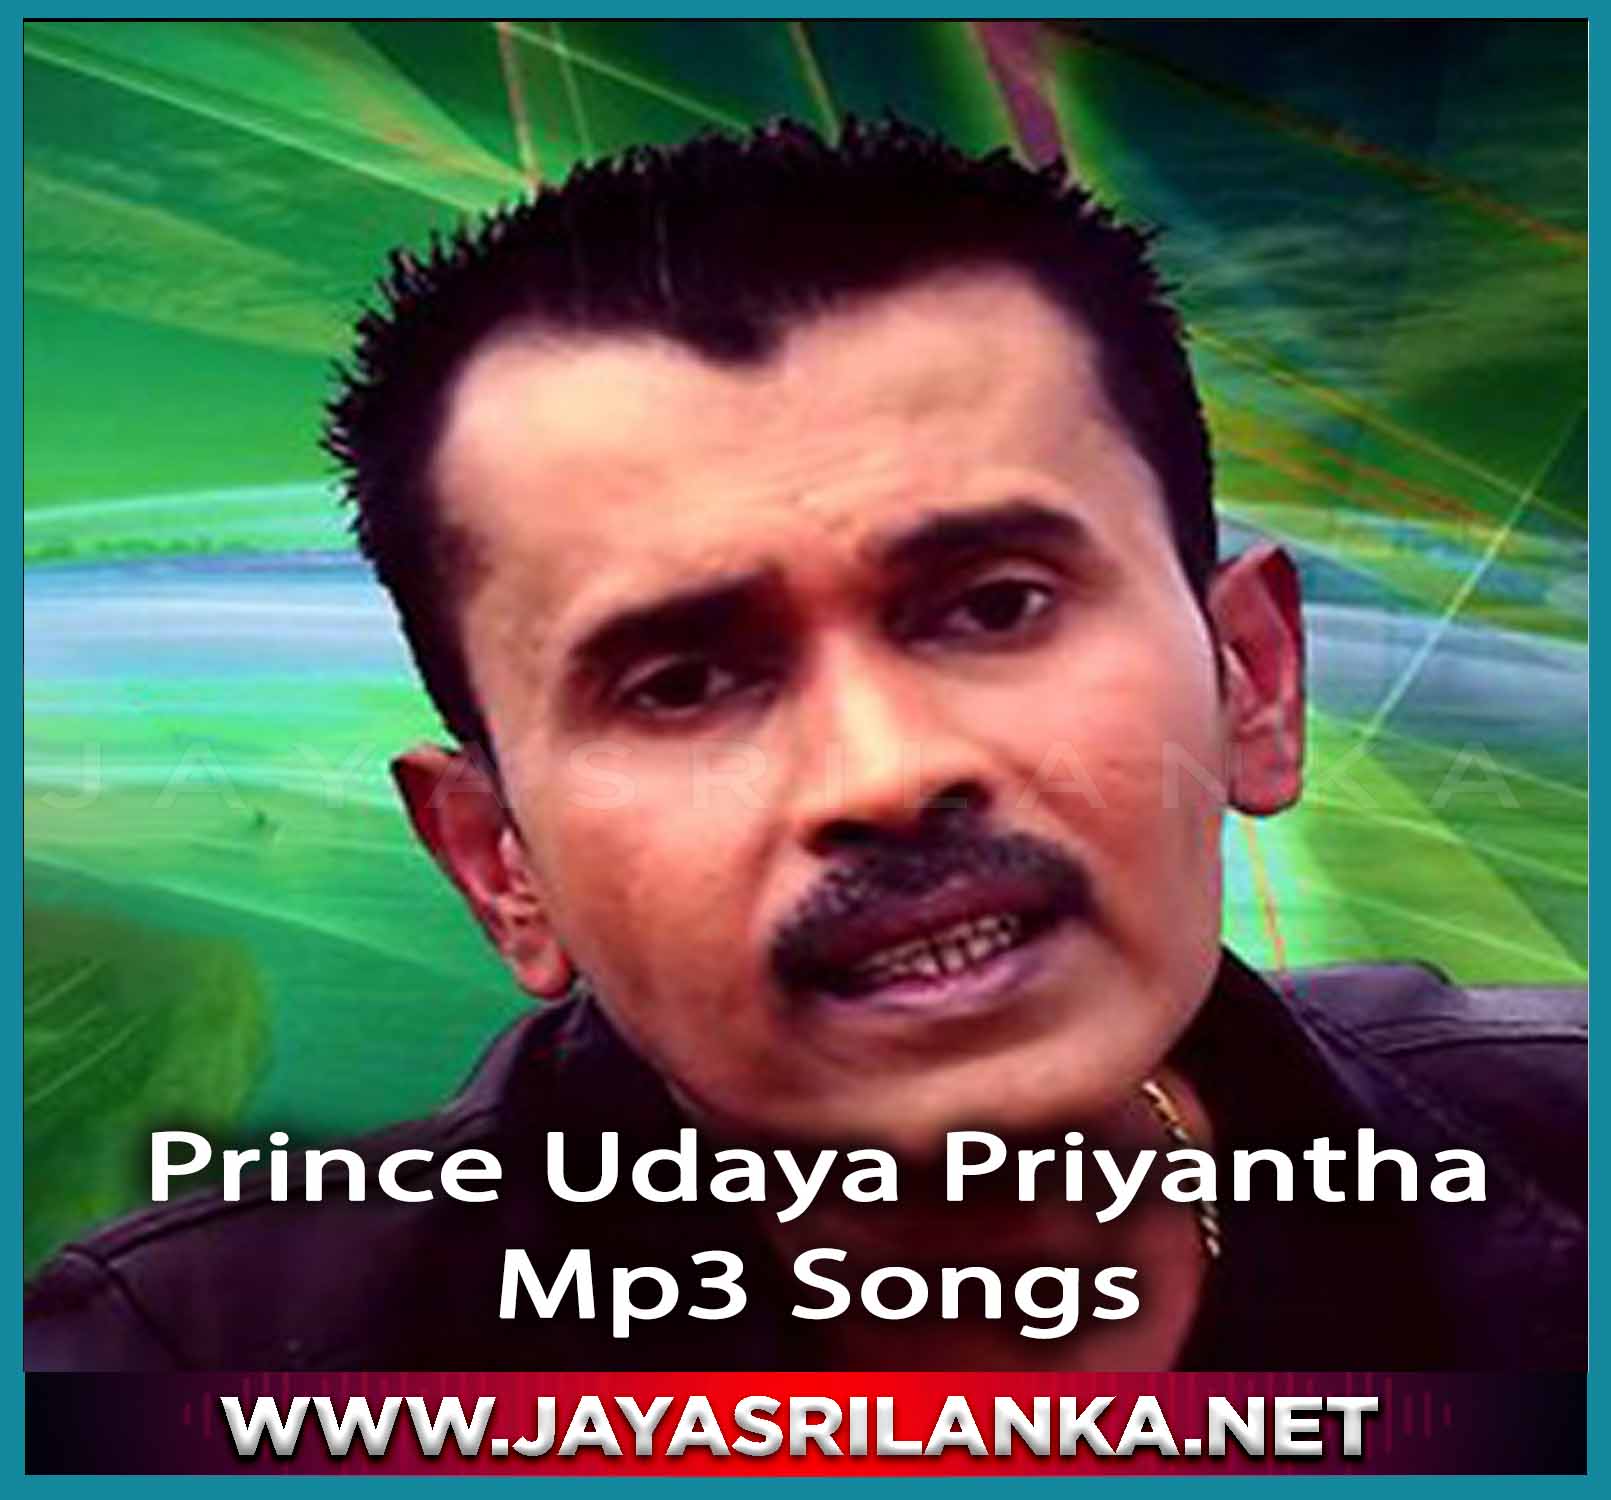 Gini Maddahane - Prince Udaya Priyantha mp3 Image